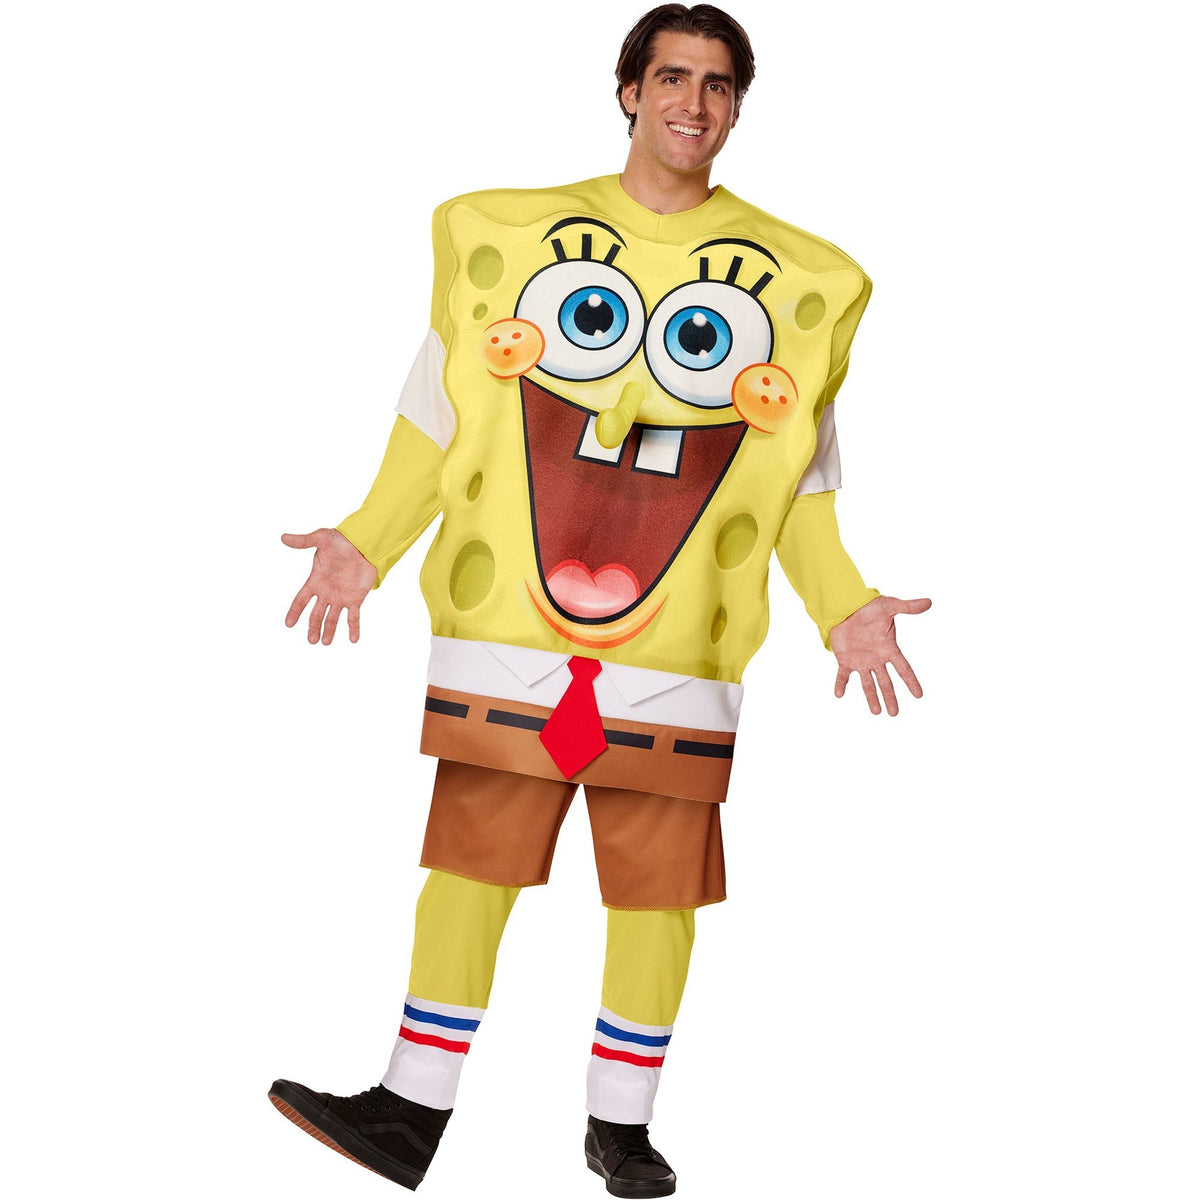 IN SPIRIT DESIGNS Costumes SpongeBob Costume for Adults, SpongeBob SquarePants, Tunic and Pants